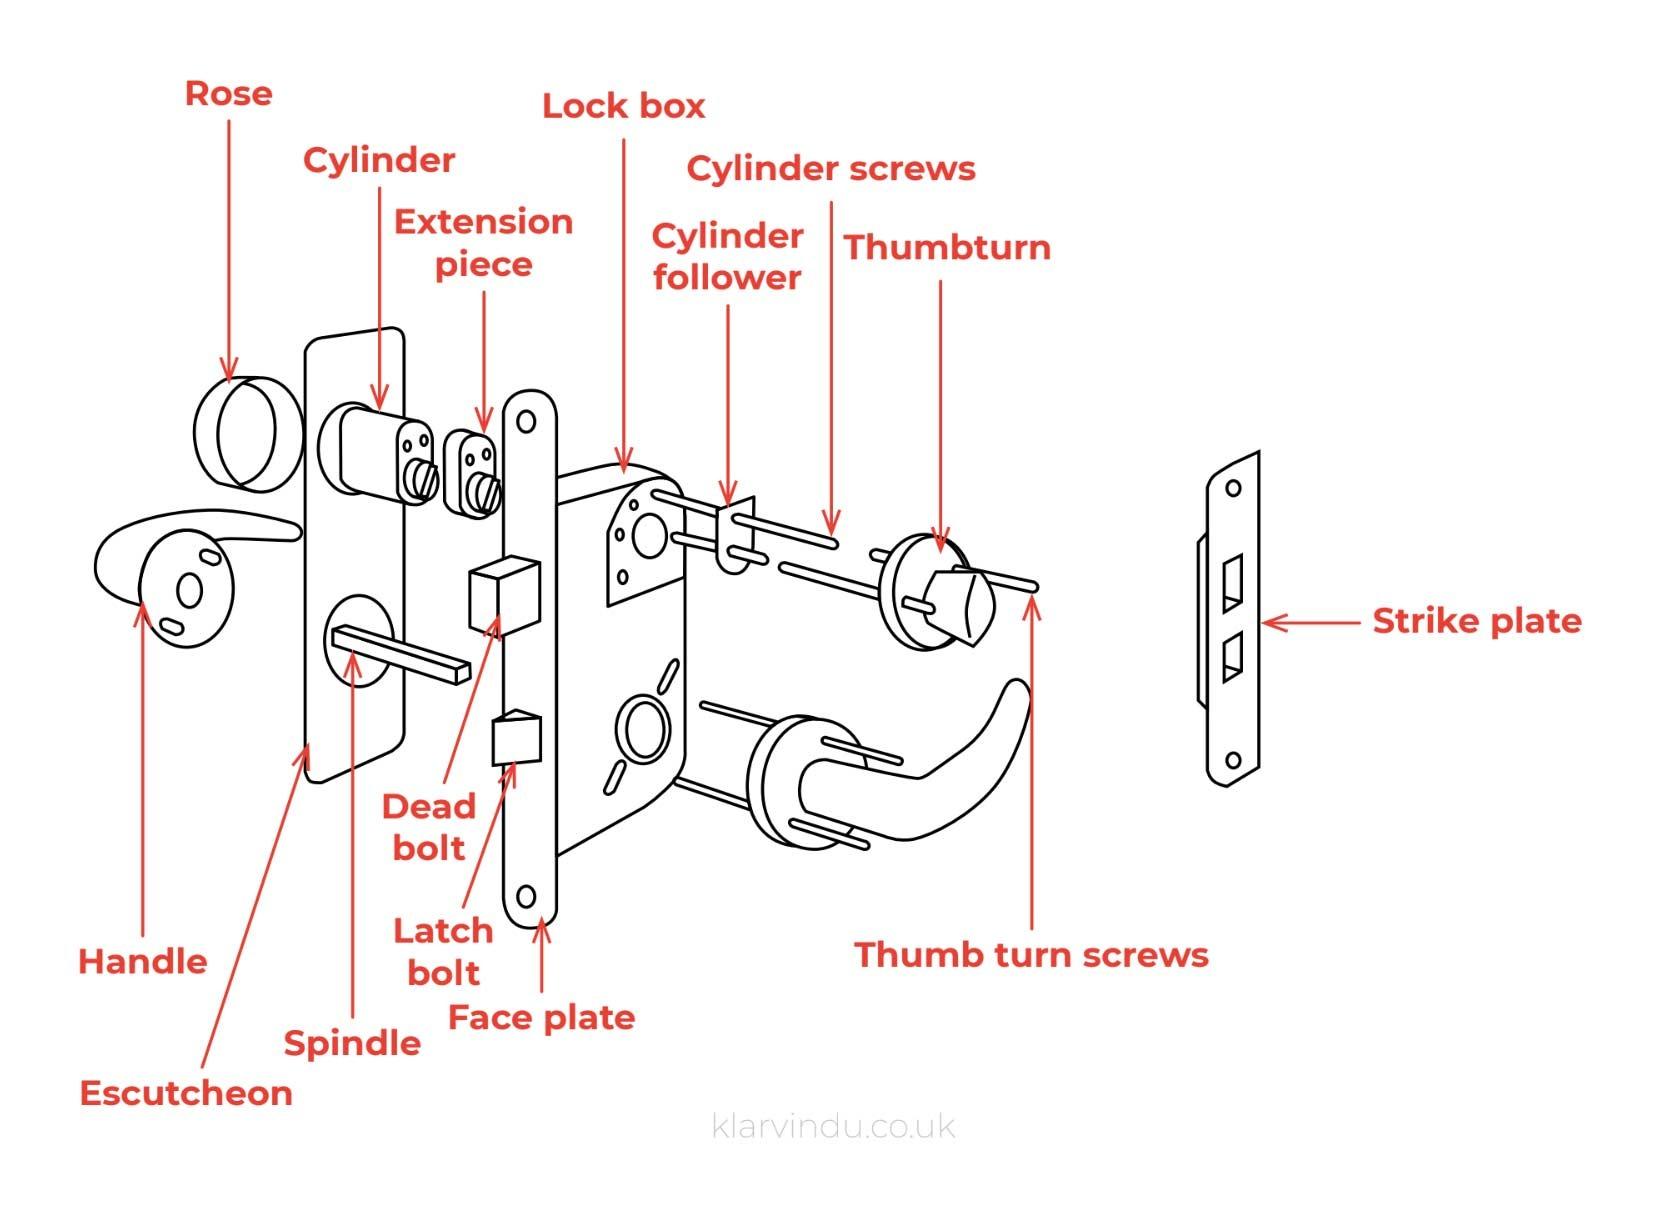 Understand the terminology on a door handle and lock